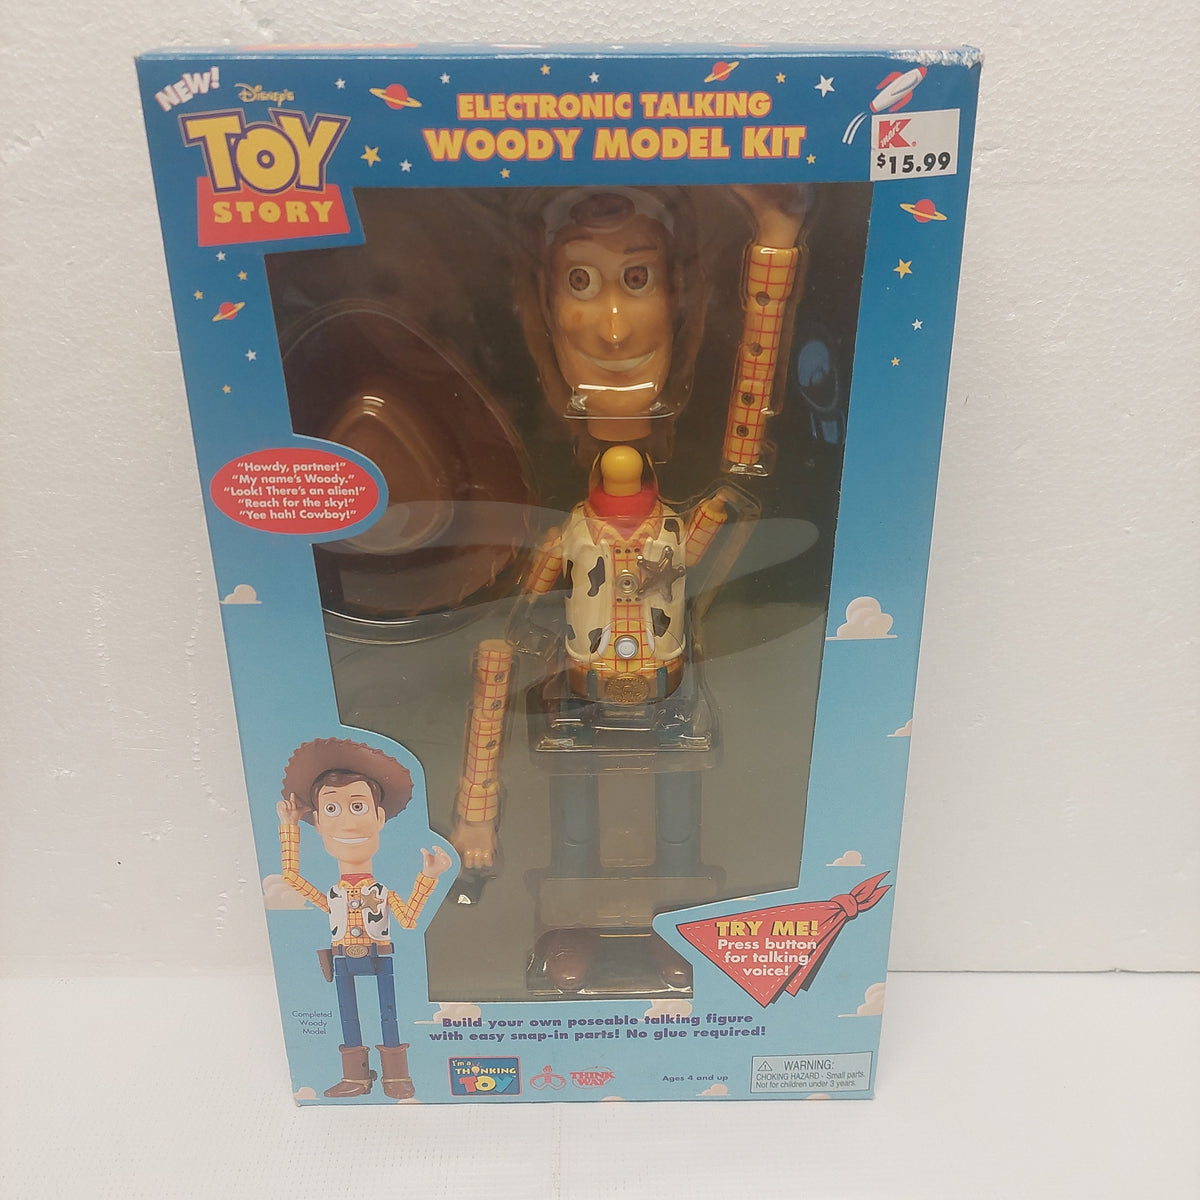 Disney's Toy Story Electronic Talking Woody Model Kit – Retro 